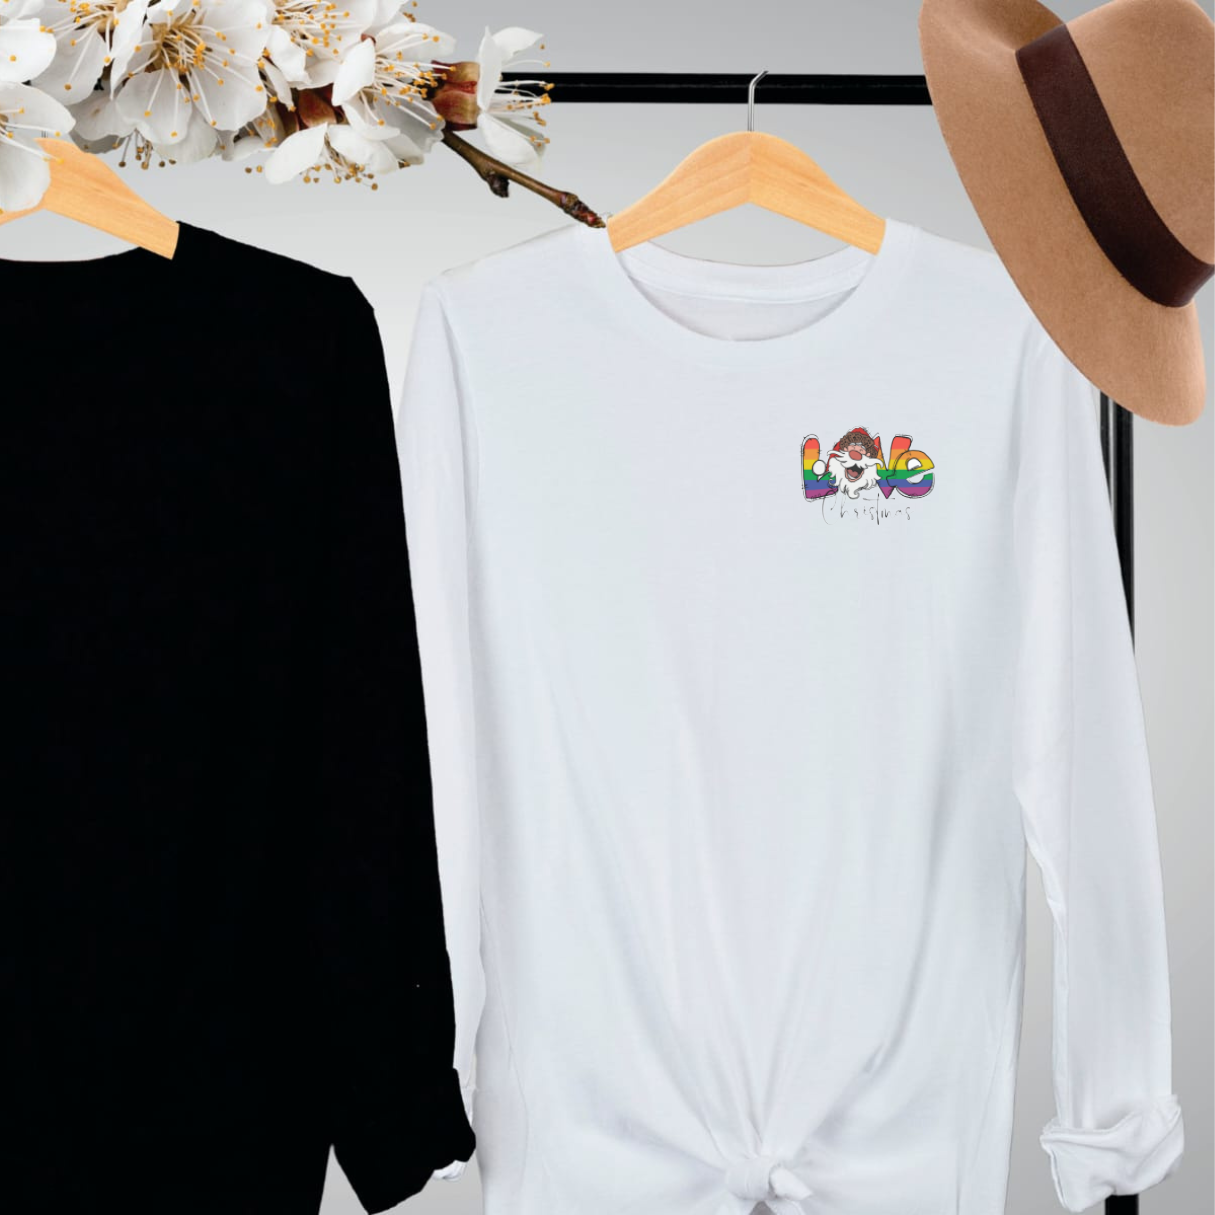 "Pride love Christmas text design centered on white long sleeve shirt."